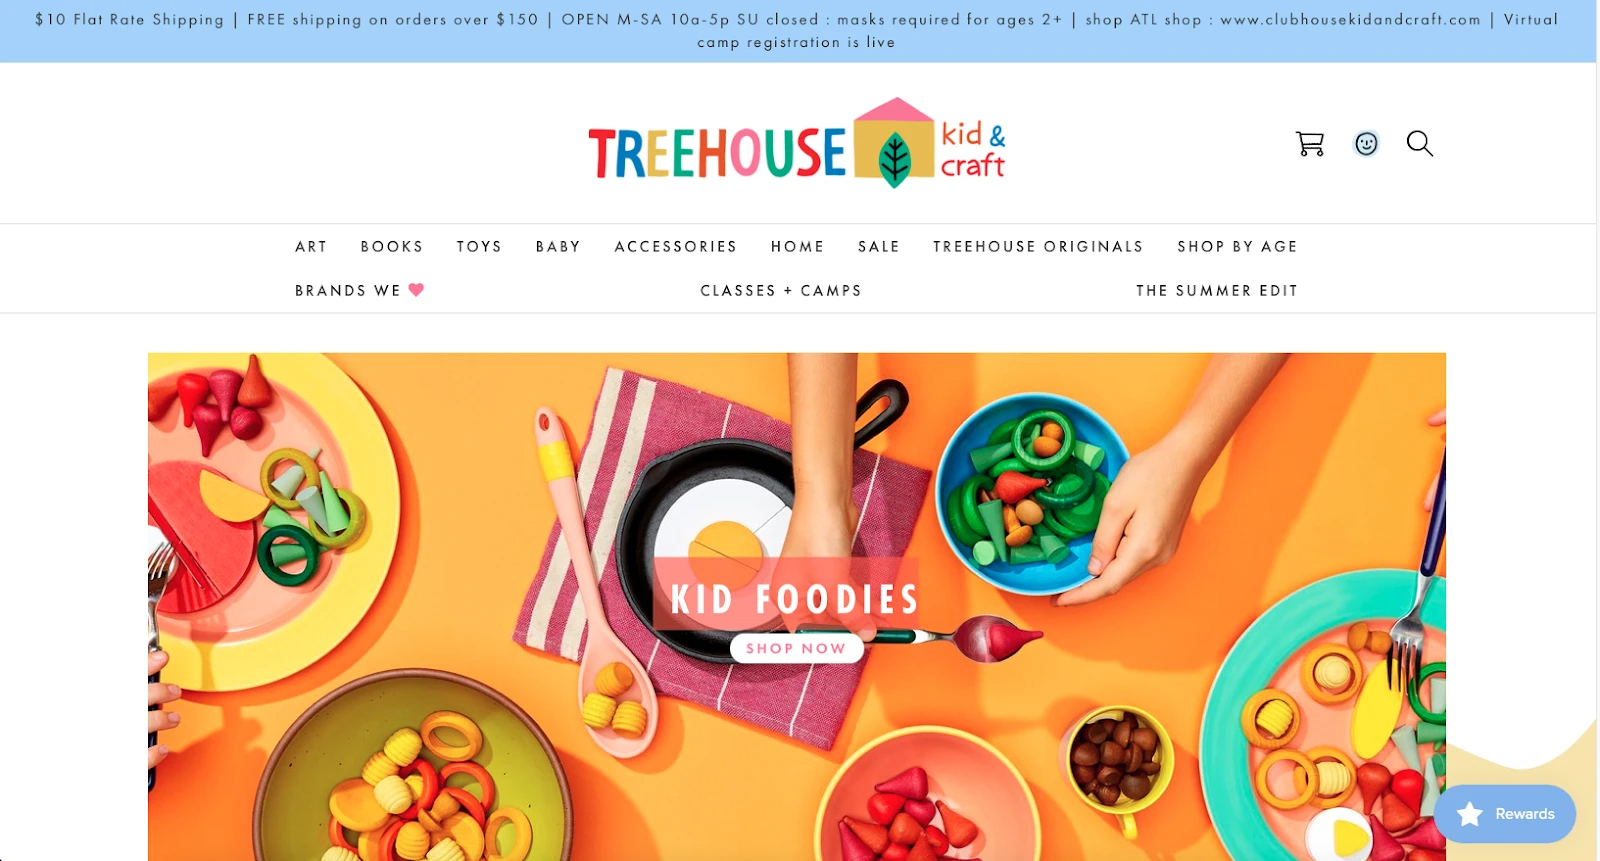 TREEHOUSE kid & craft 在线商店主页